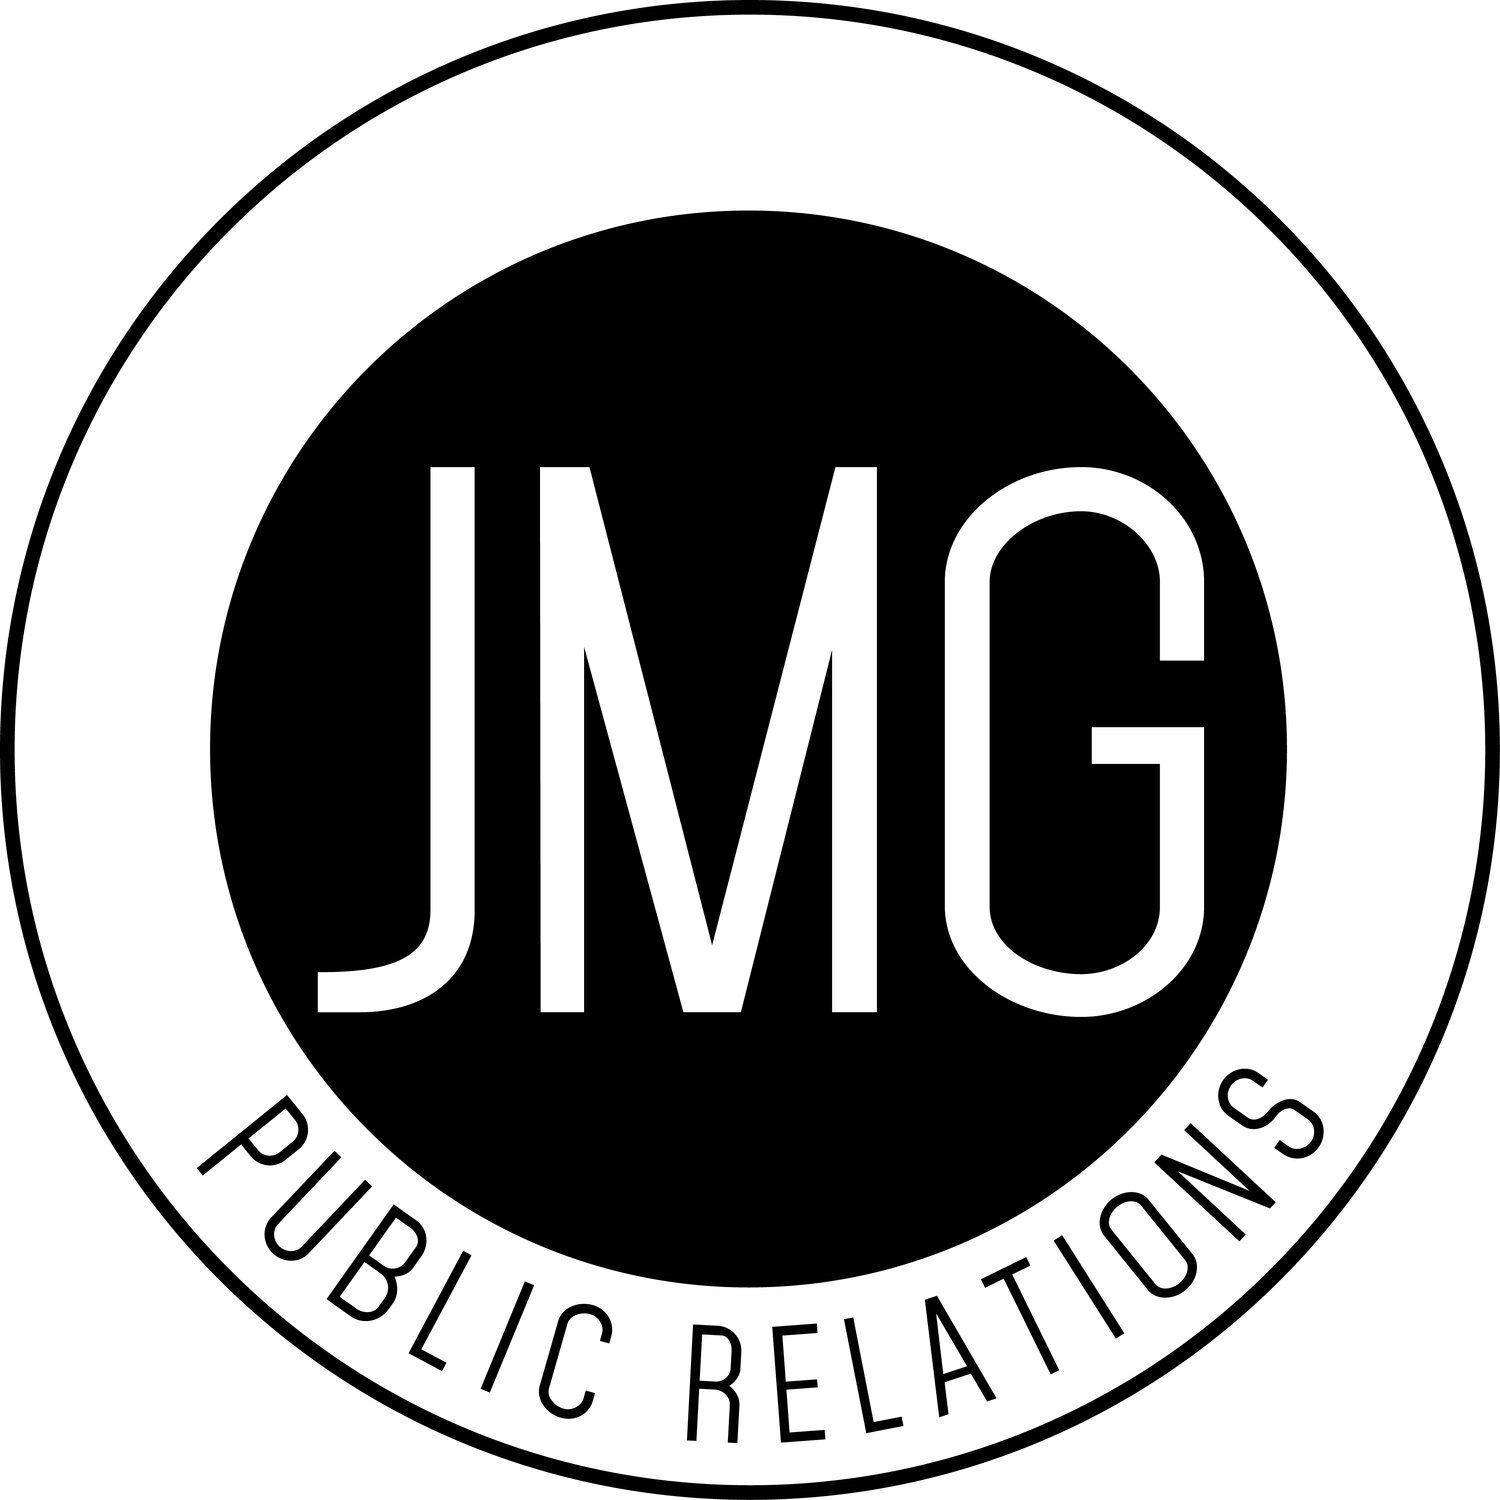 JMG Logo - LogoDix